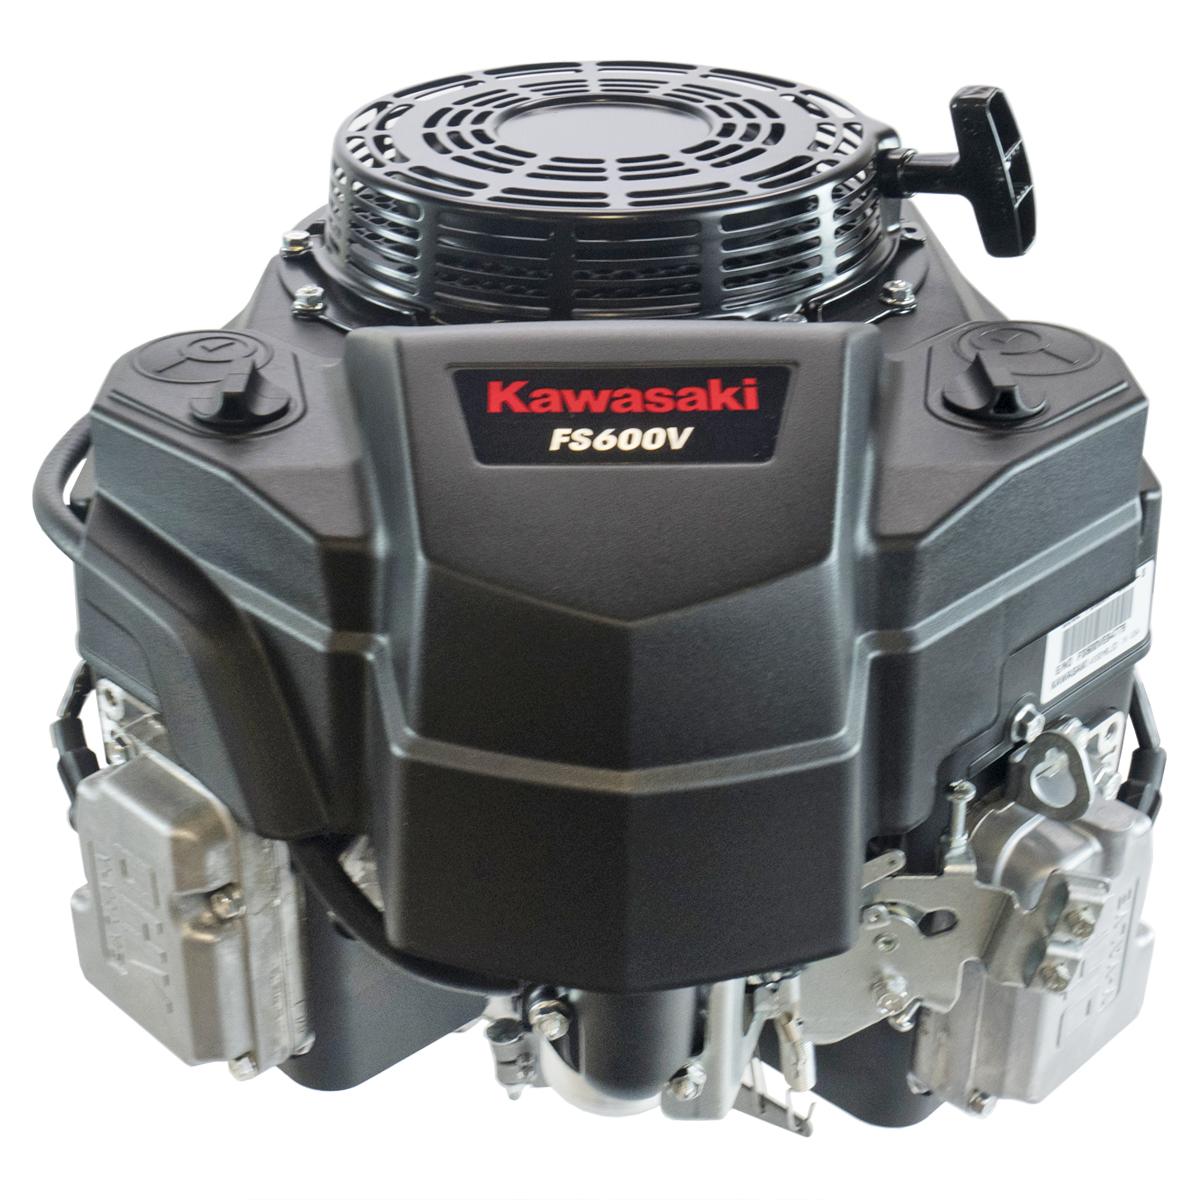 FS600V-S01 18.5hp FS Series, Vertical 1"x3-5/32" Shaft, Fuel Pump, Recoil Start, OHV, CIS, 13 Amp Alternator, Kawasaki Engine